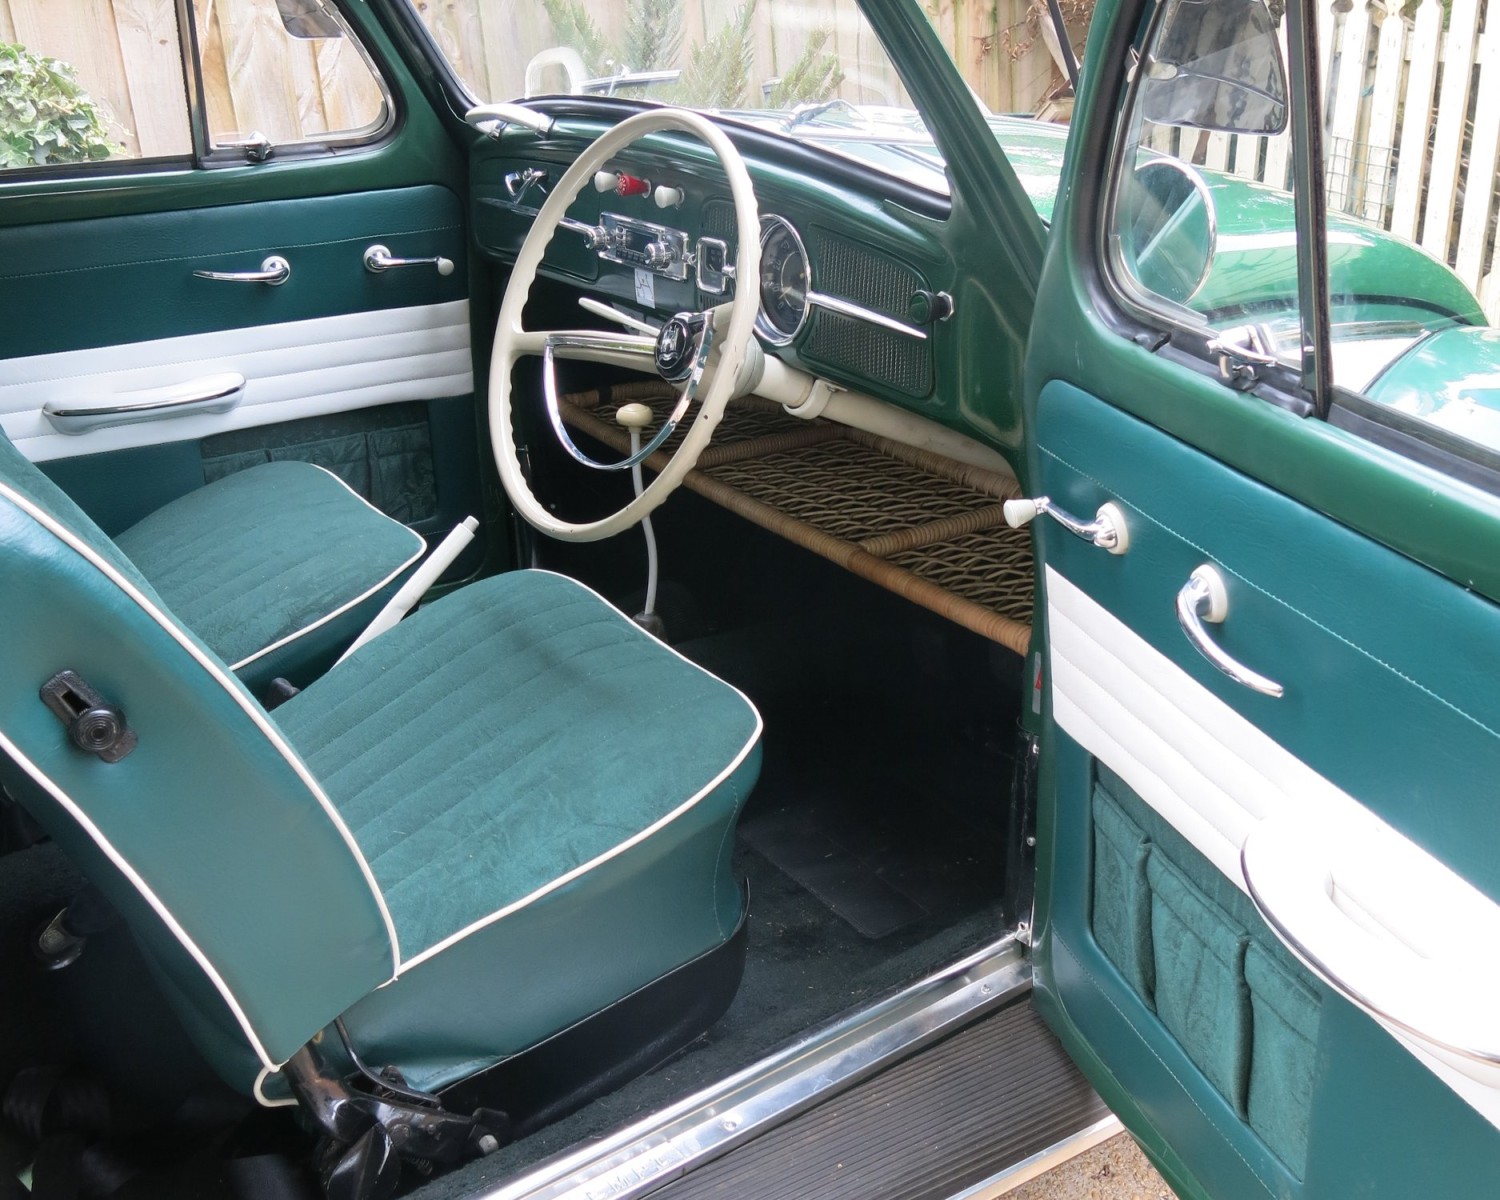 1966 Volkswagen 1300 (BEETLE) - sharynb5 - Shannons Club